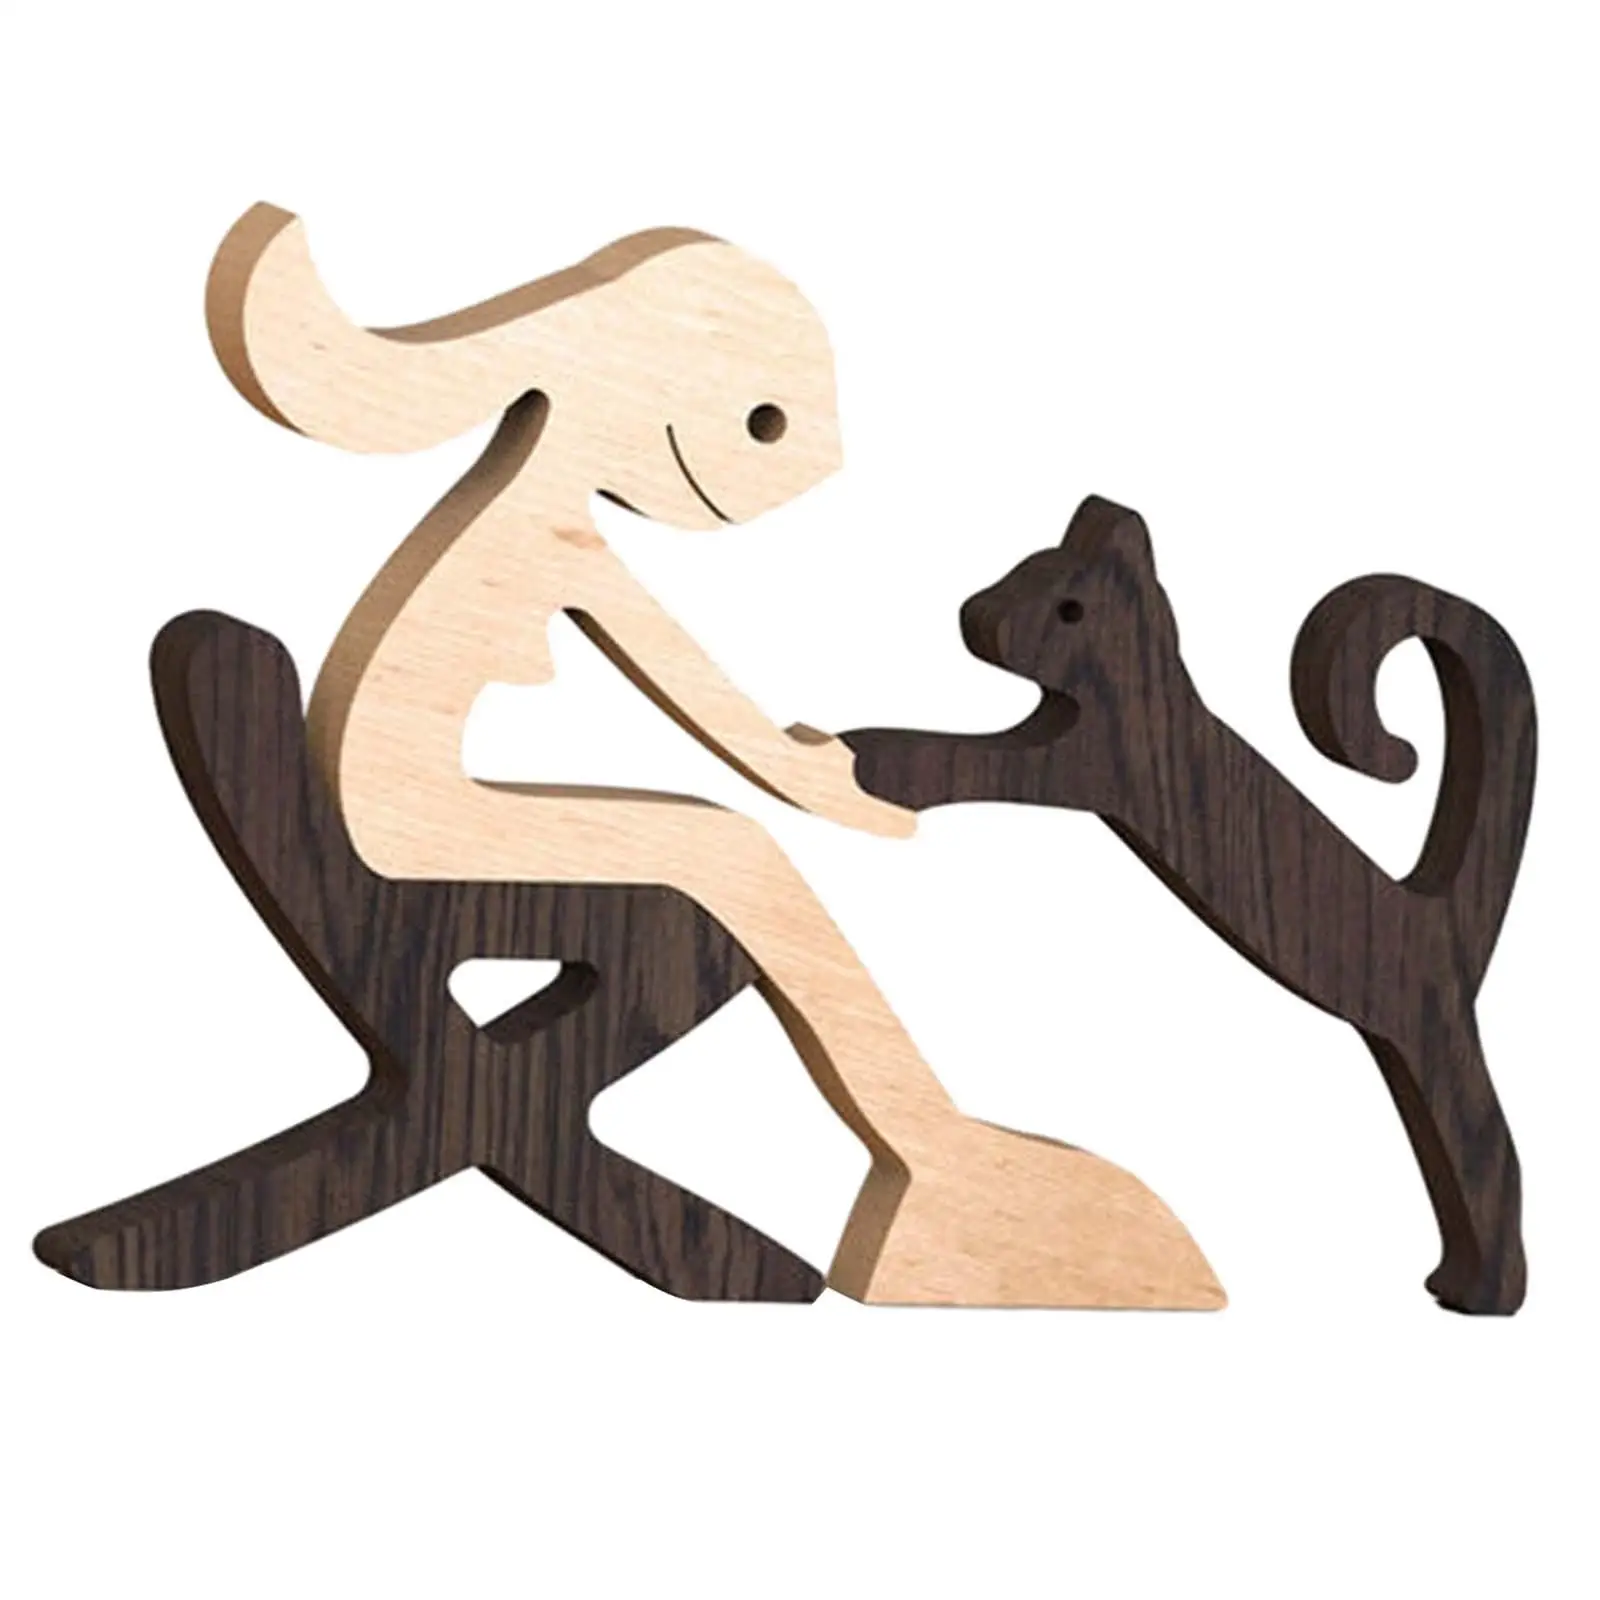 Wooden Woman Dog Carving Model Figurine Remember Friendship Wooden Dog Gift for Dog Lover for Women Woman Dog Lover Desk Office